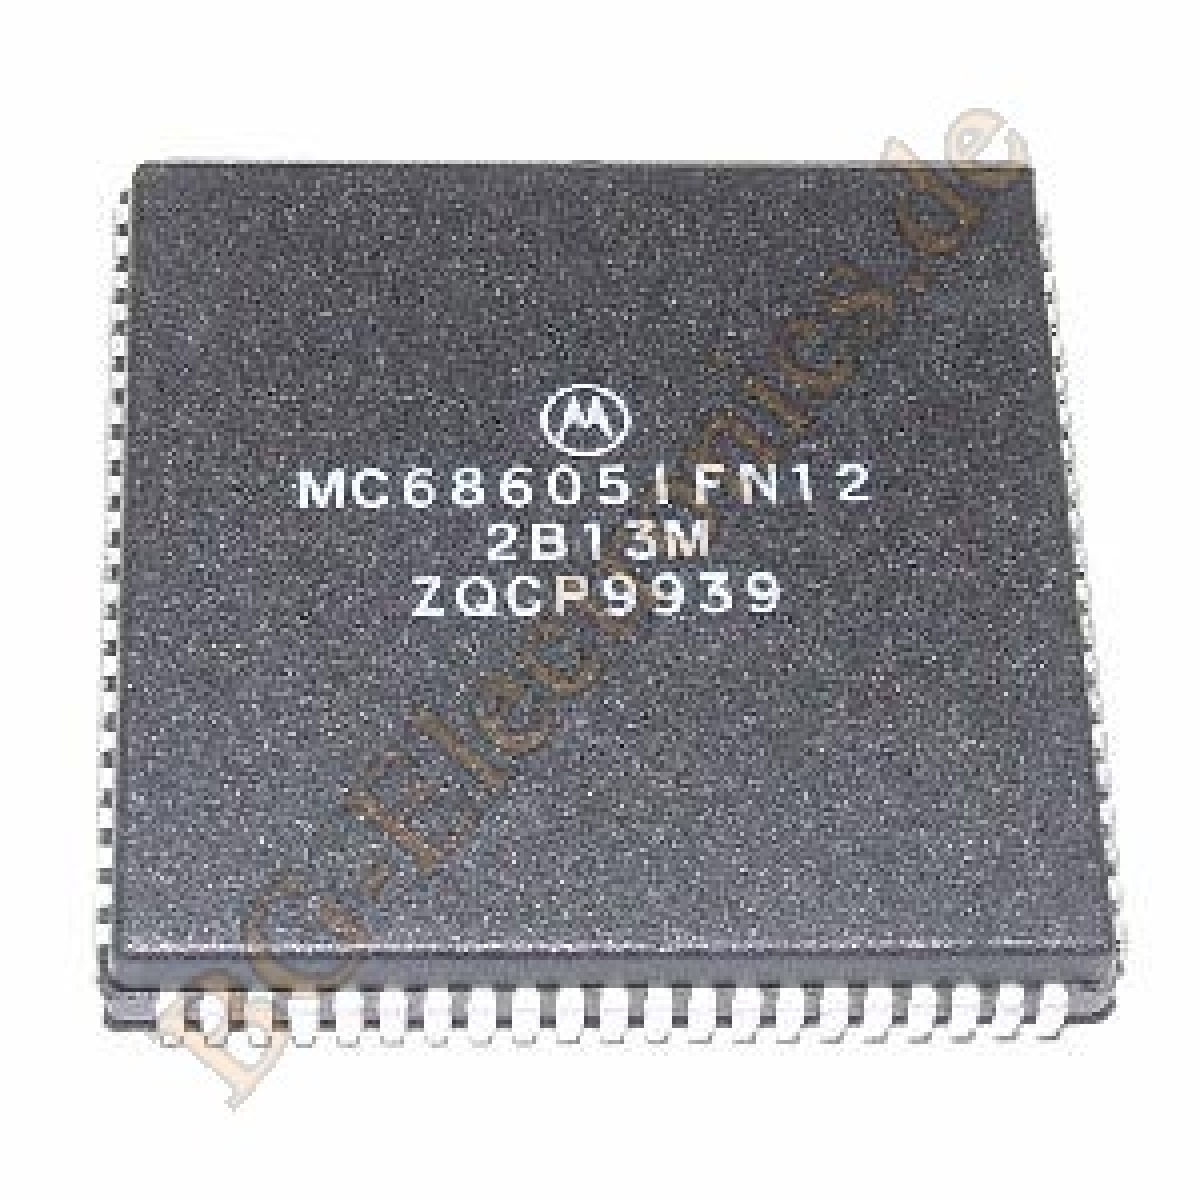 MC68605IFN12